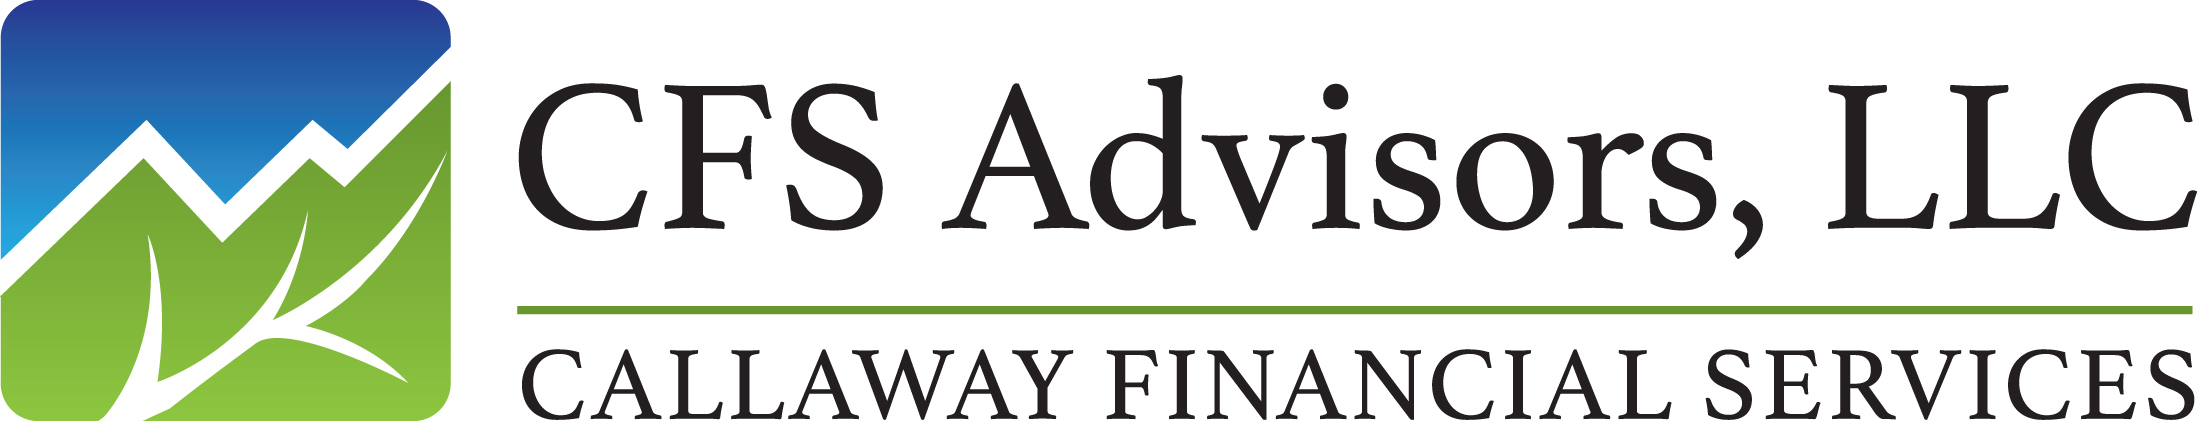 CFS Advisors, LLC dba Callaway Financial Services